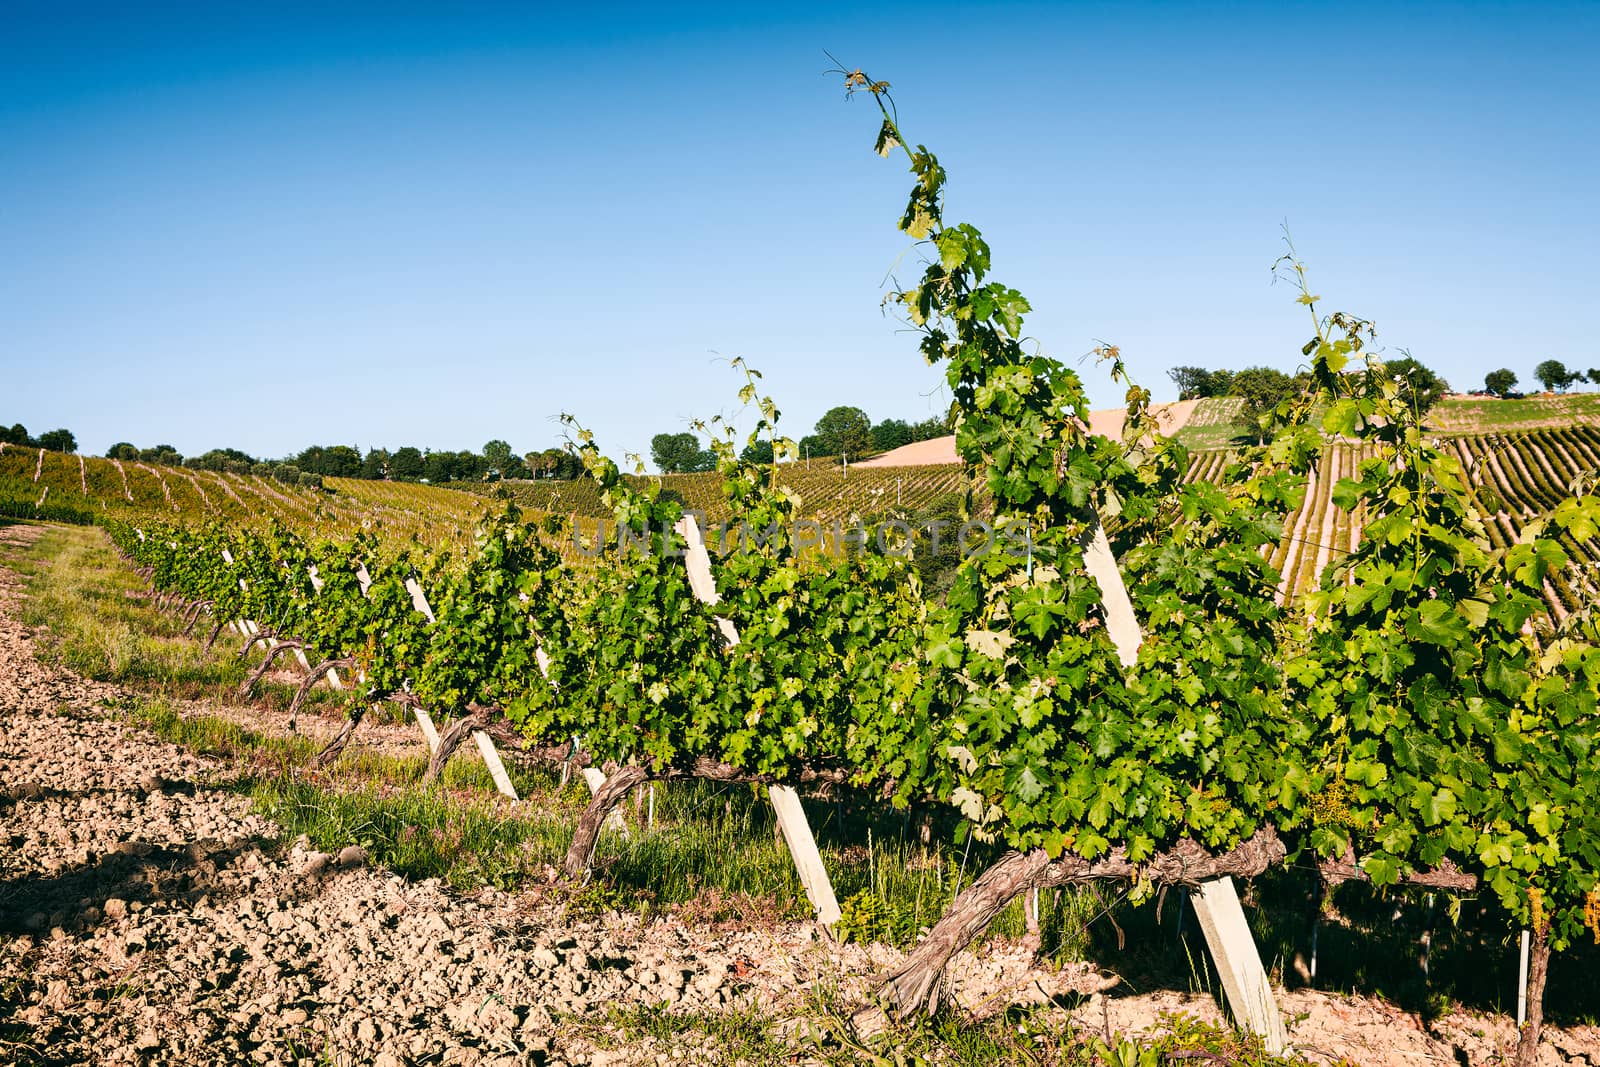 Vineyard fields against a blue sky